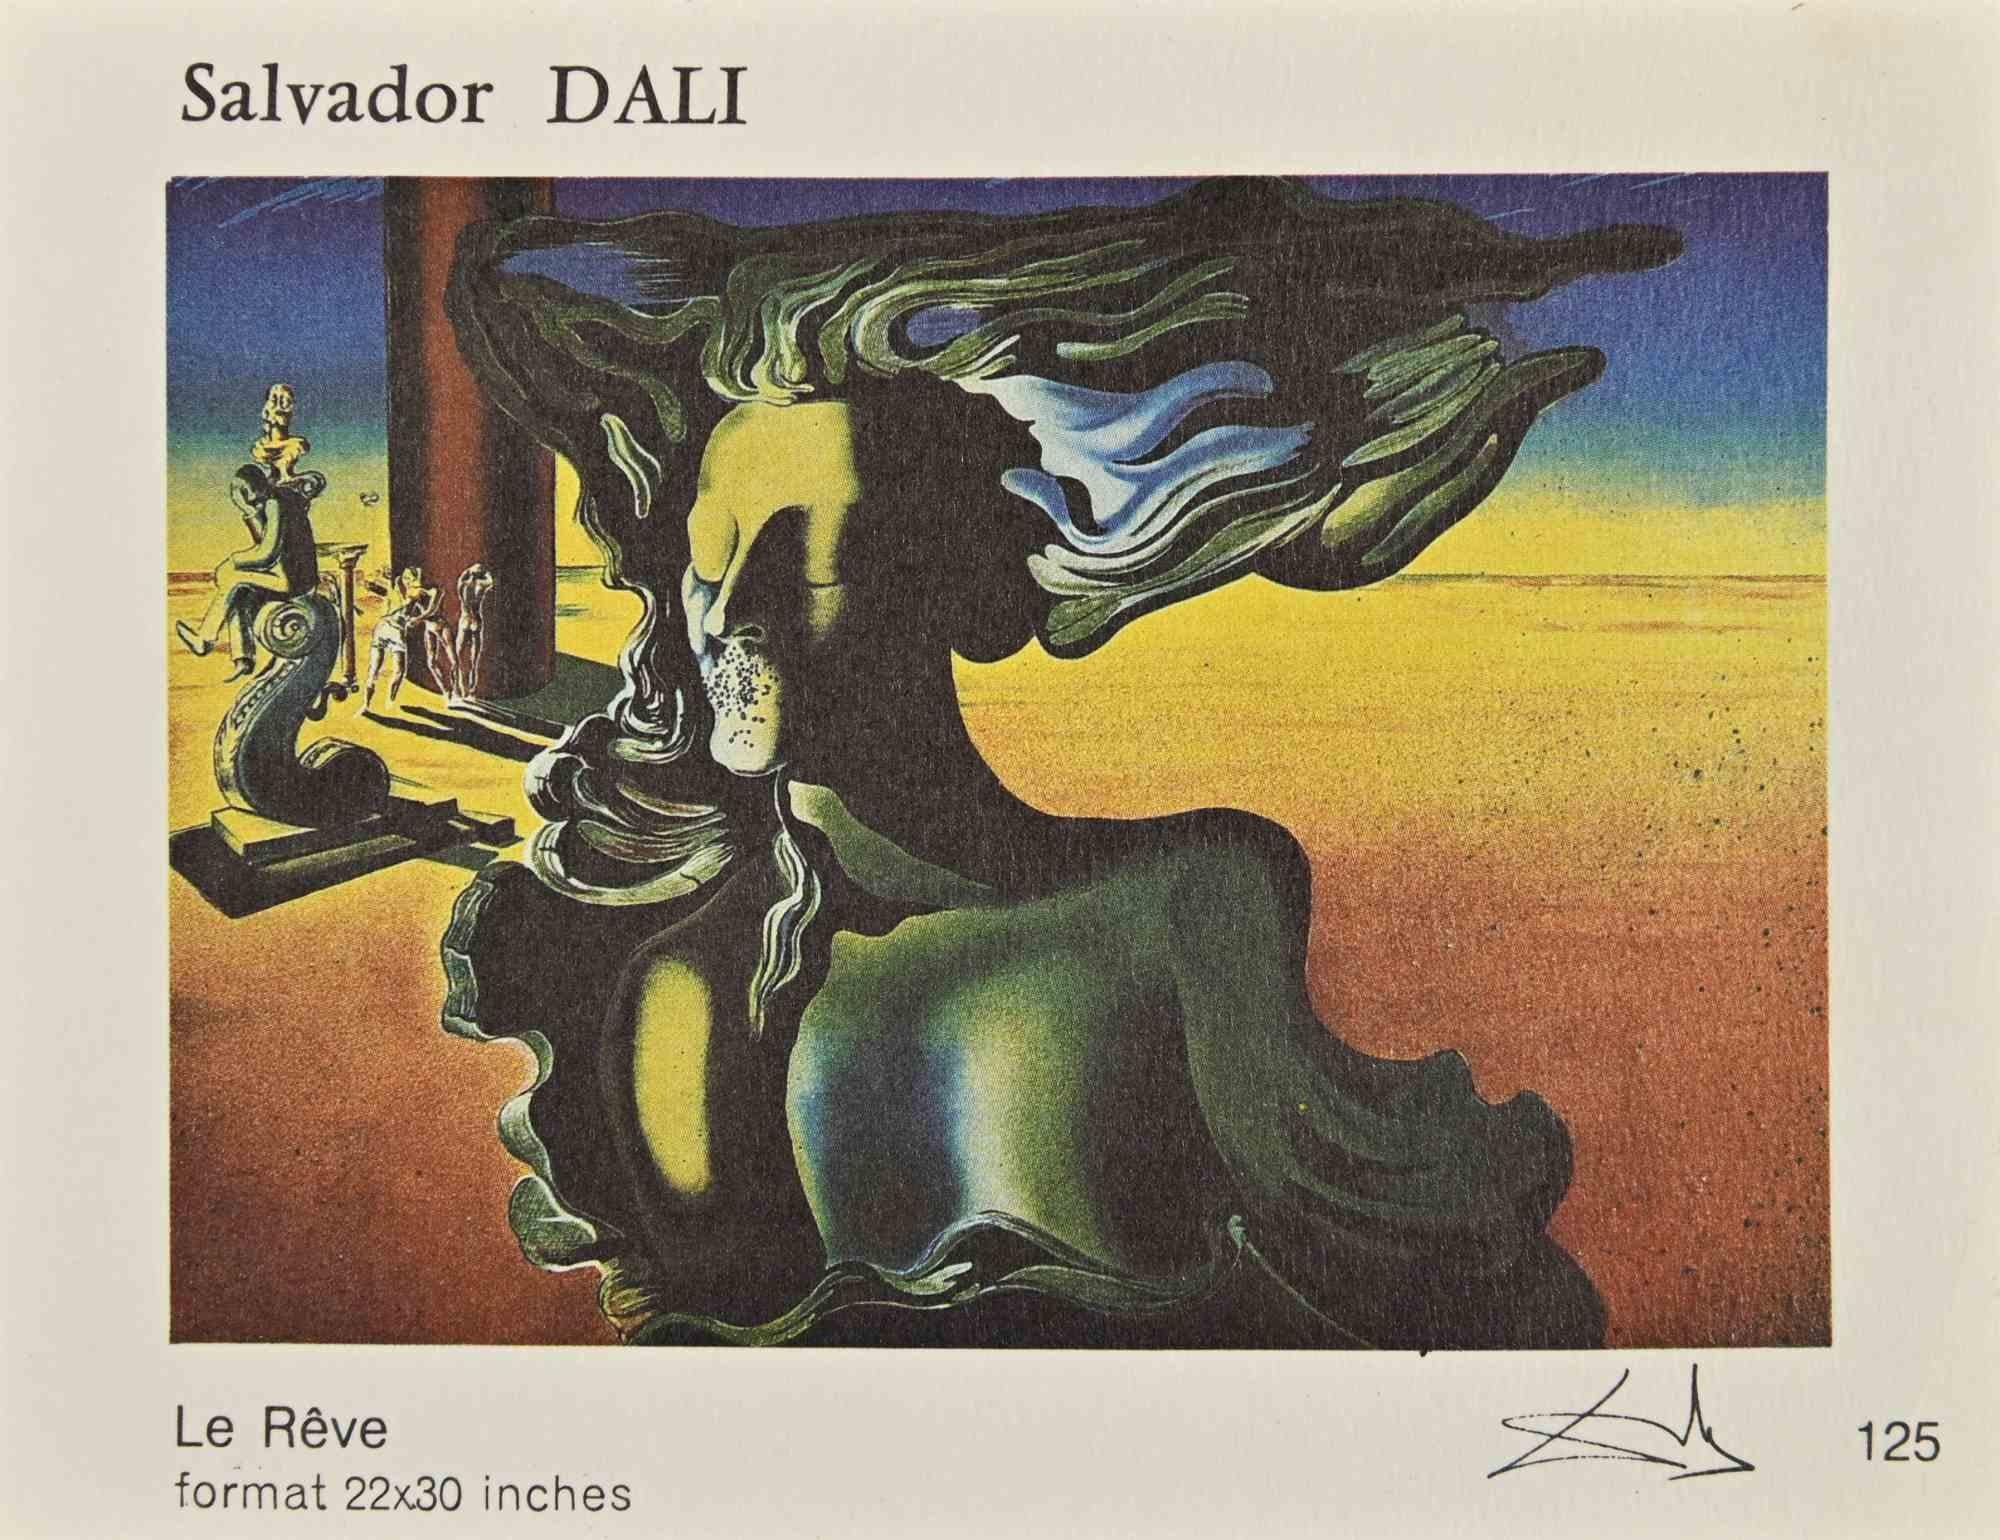 Collection of Vintage Cards After Salvador Dalì - 1980s For Sale 2